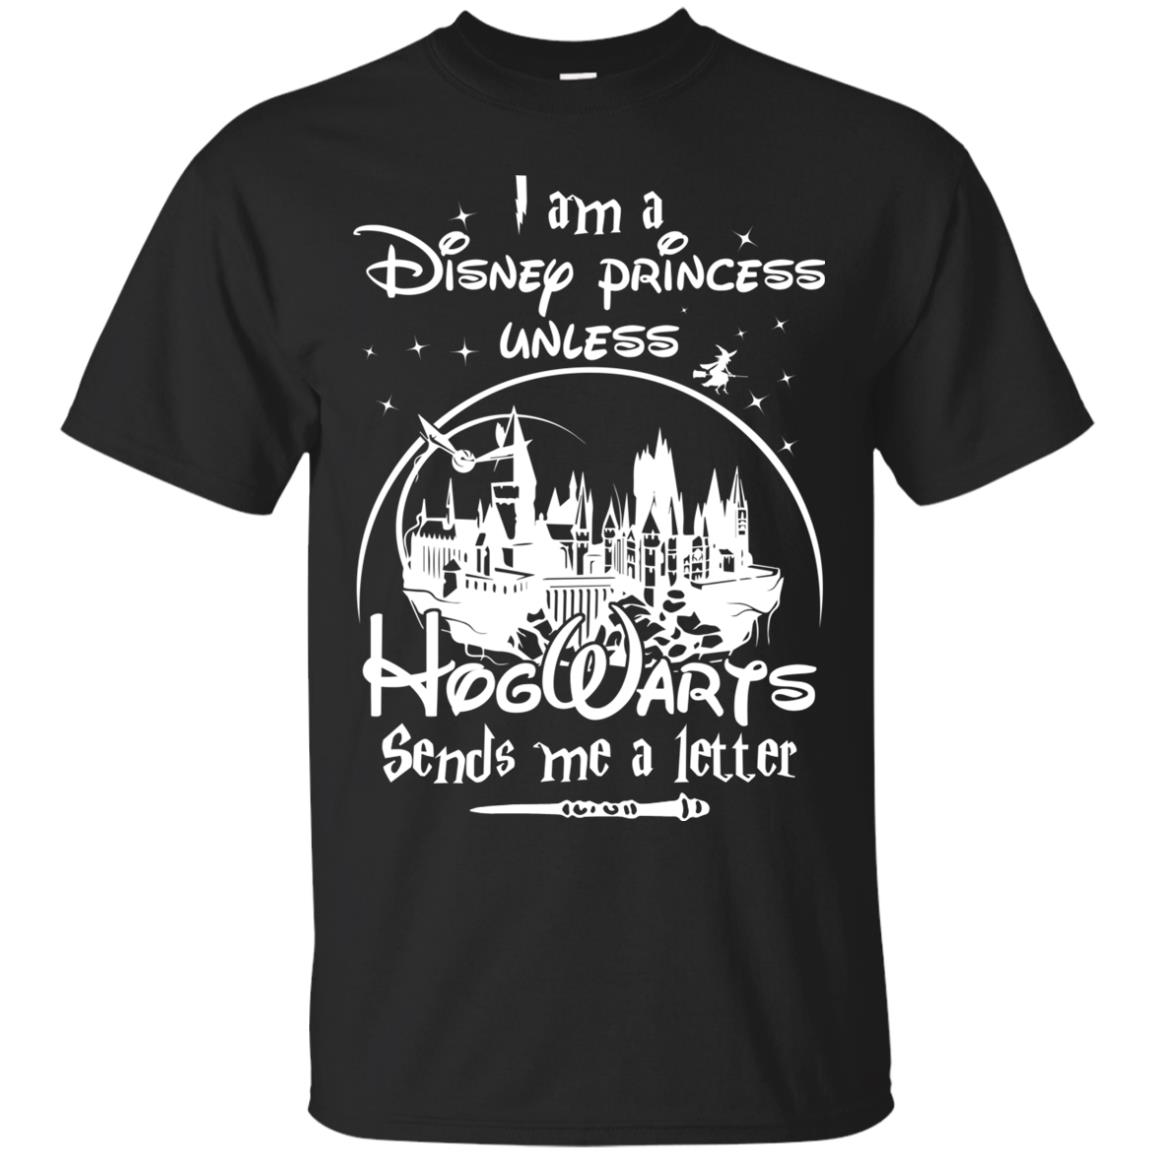 I am a Disney princess unless Hogwarts sends me a letter t shirts